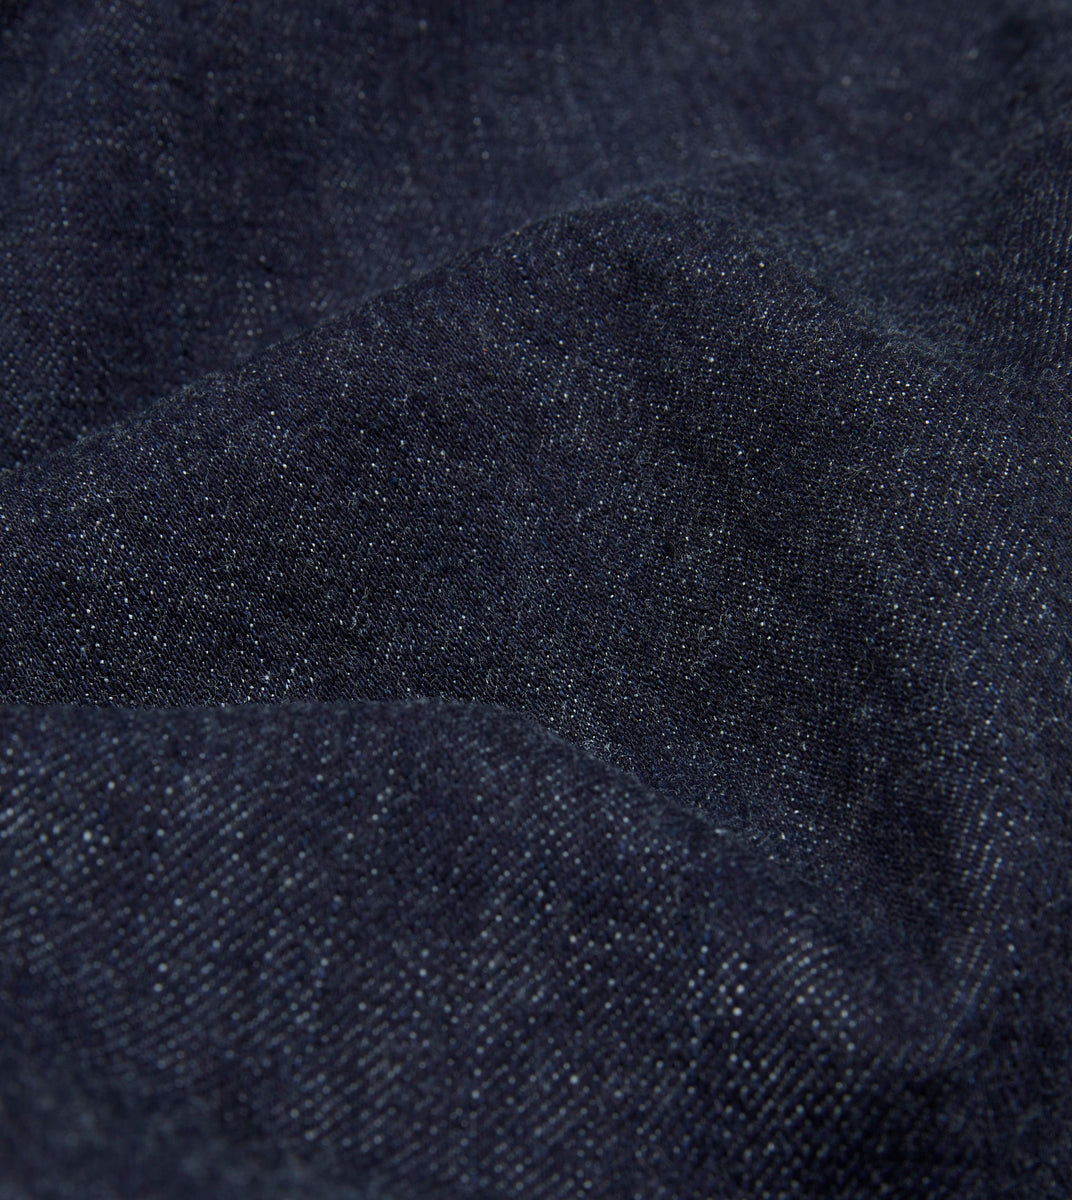 Indigo Rinse 14.2oz Japanese Selvedge Denim Five-Pocket Jeans – Drakes